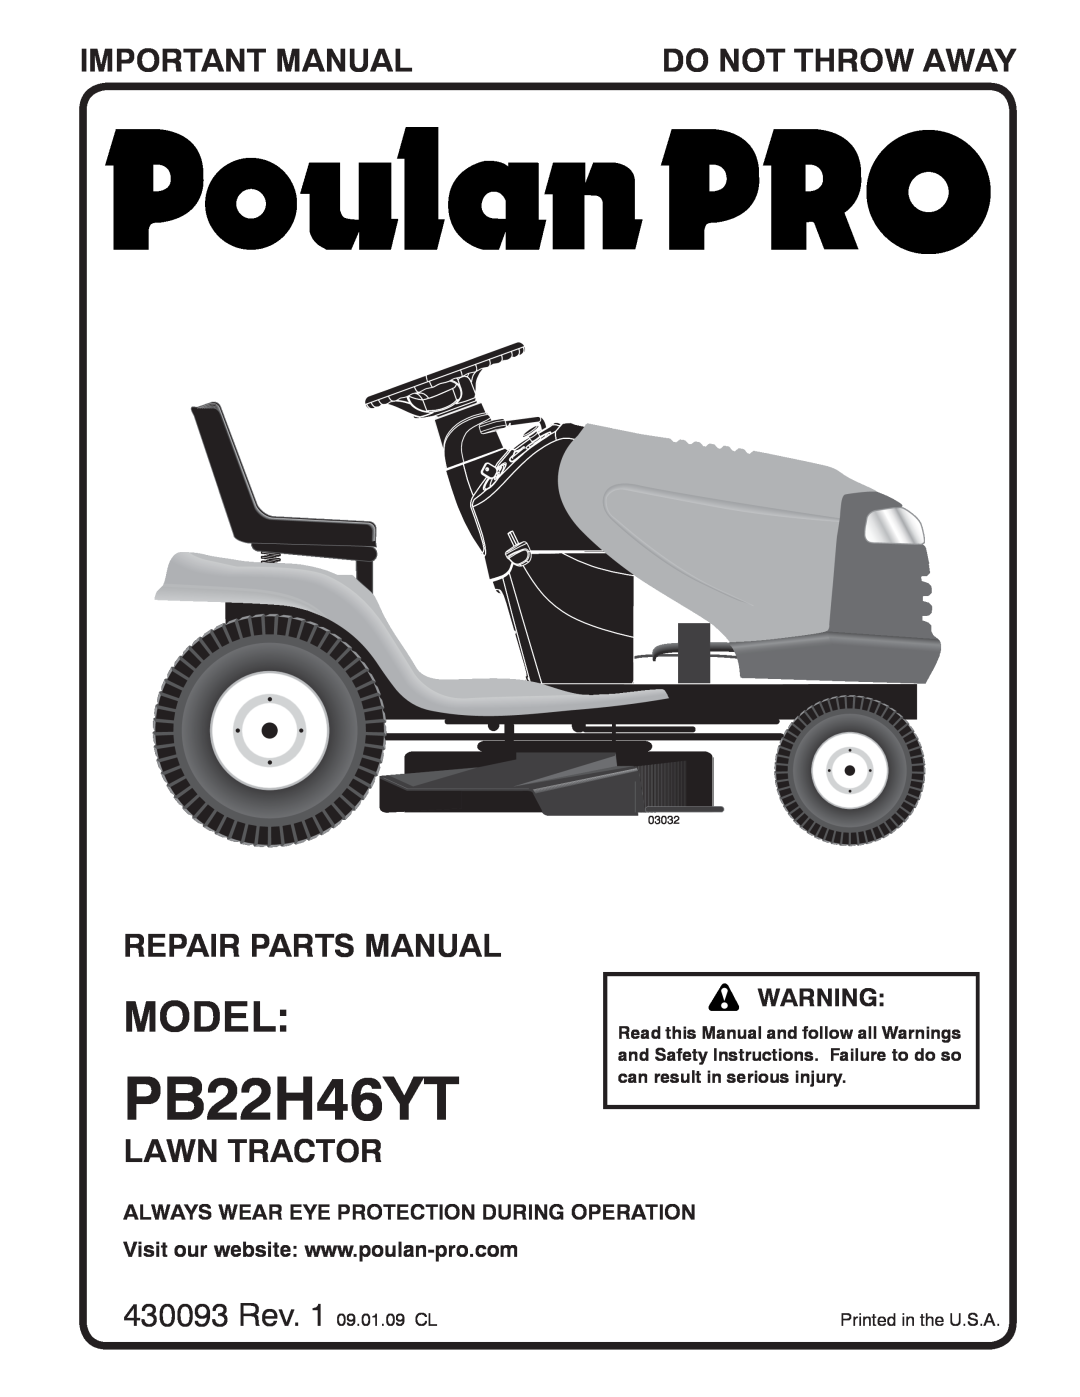 Poulan PB22H46YT manual Model, Important Manual, Operators Manual, Lawn Tractor, Do Not Throw Away, 03076 